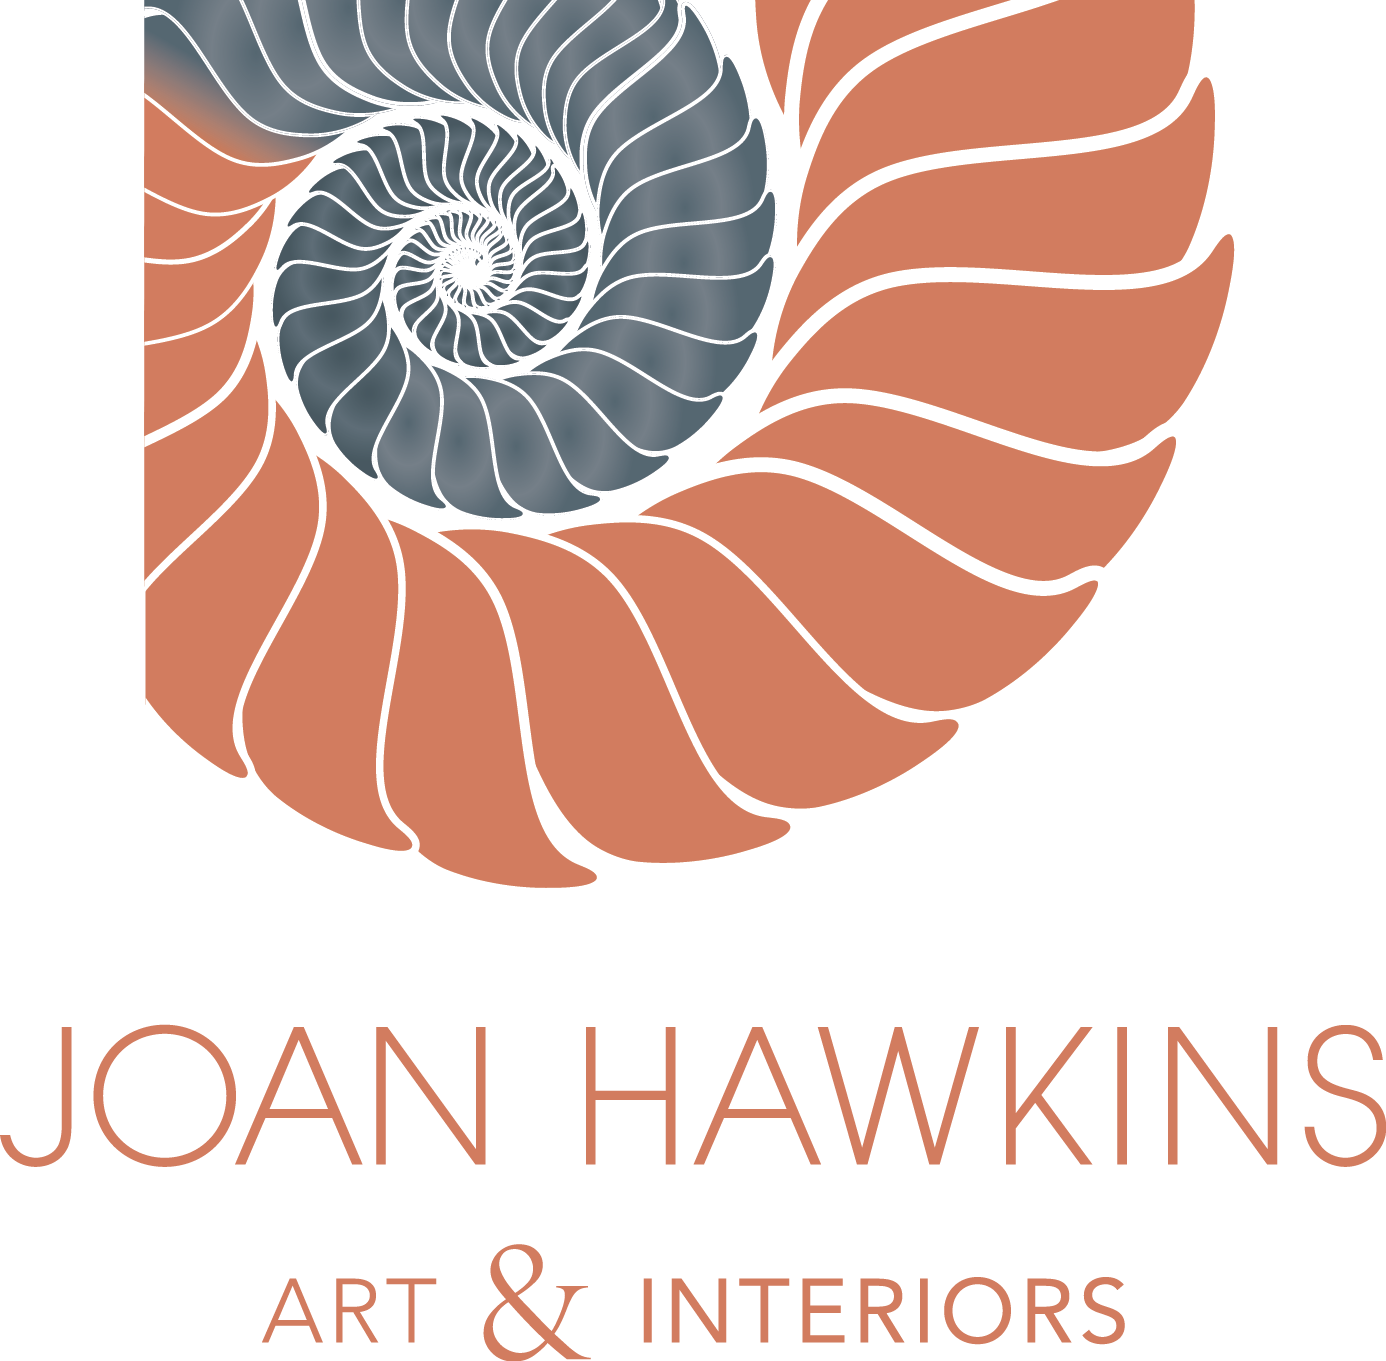 Joan Hawkins Art & Interiors